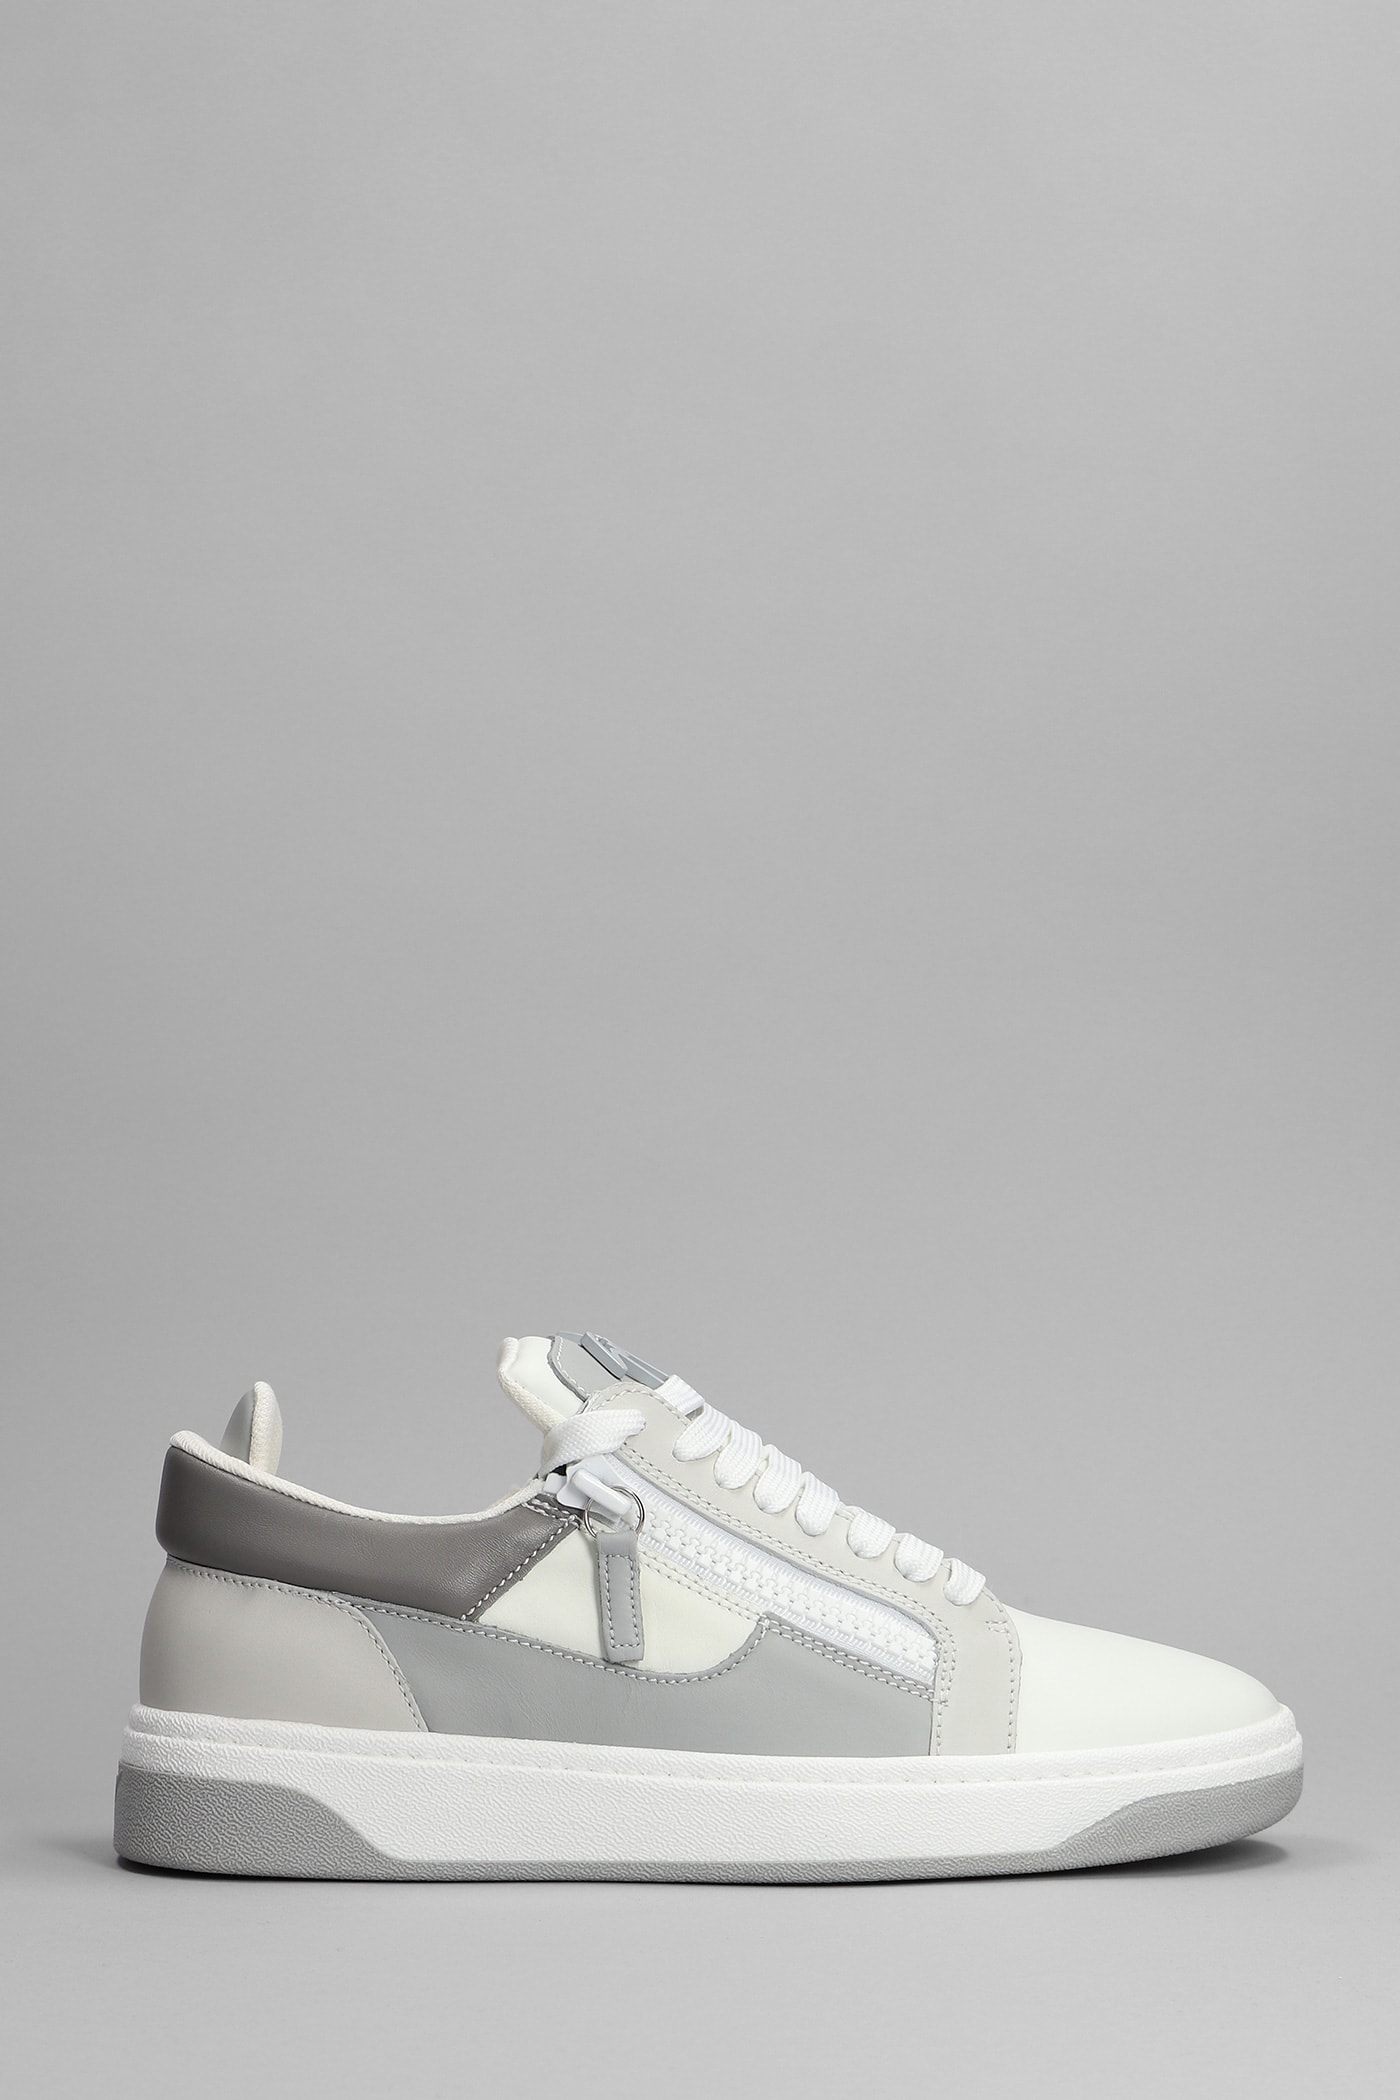 Giuseppe Zanotti Gz94 Sneakers In White Leather